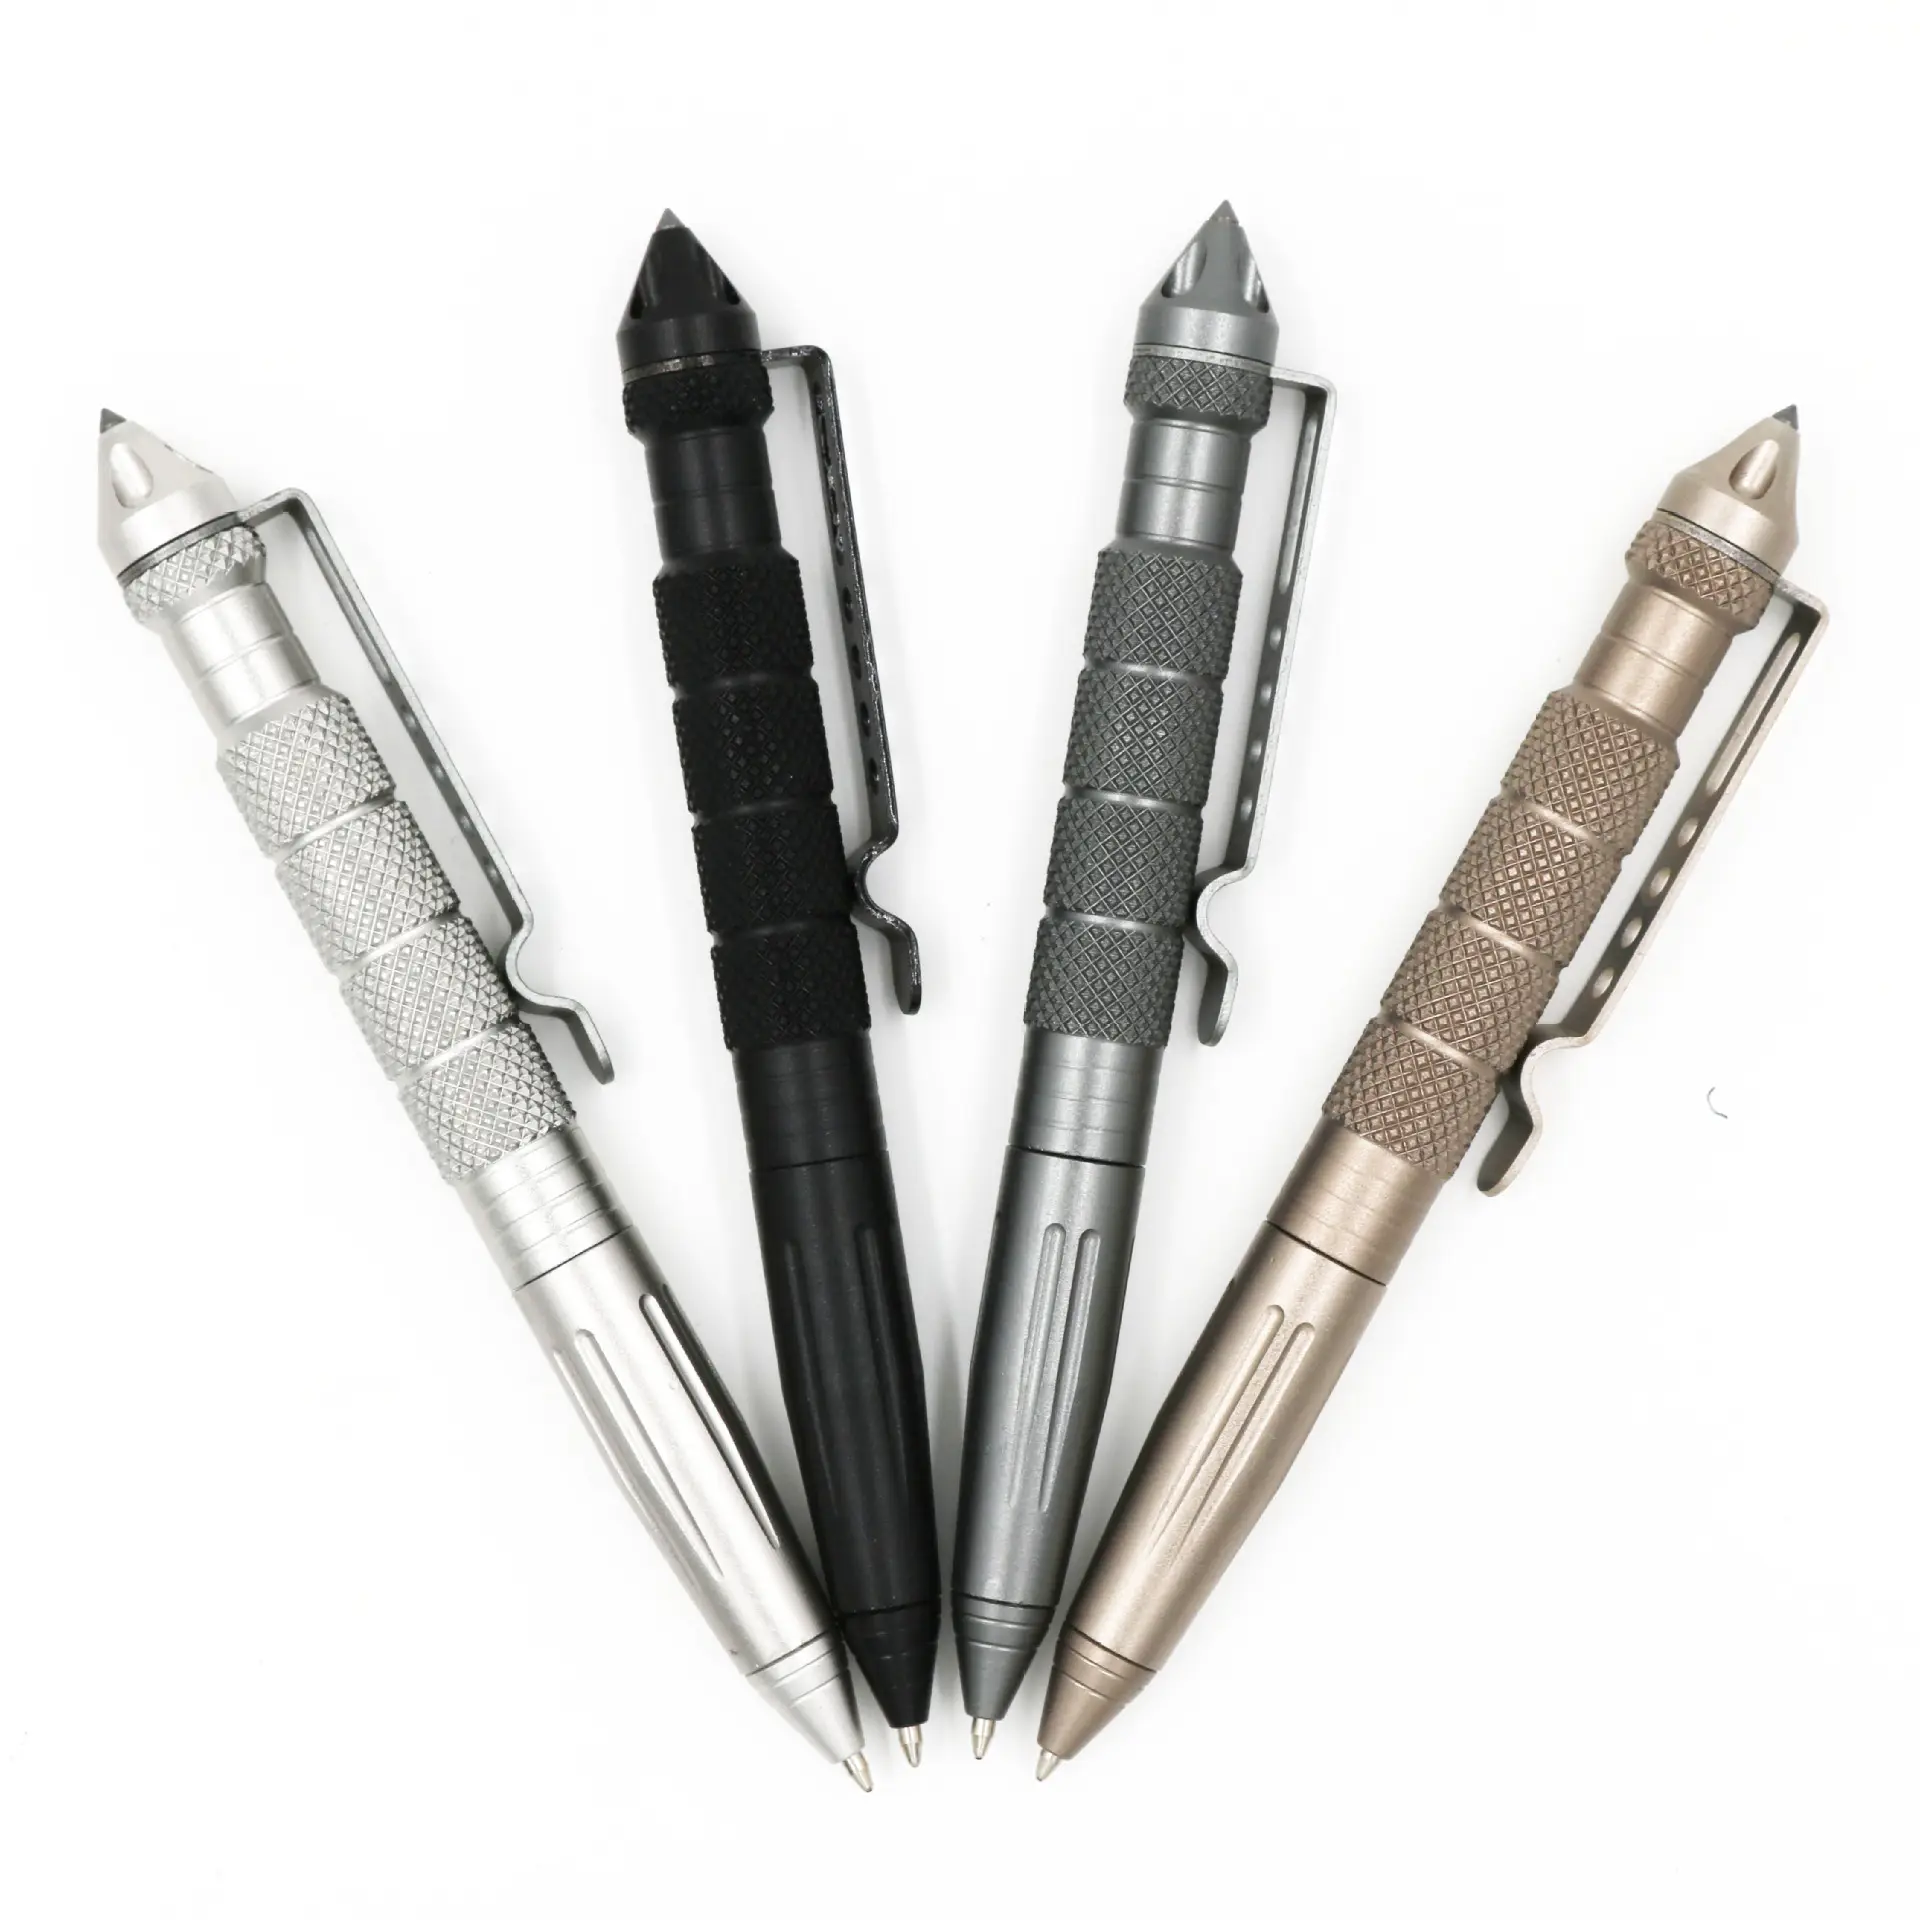 Custom Outdoor Camping Travel Gifts Tactical Pen Self Defense Glass Breaker Emergency Aircraft Aluminum Defender Tactical Pen